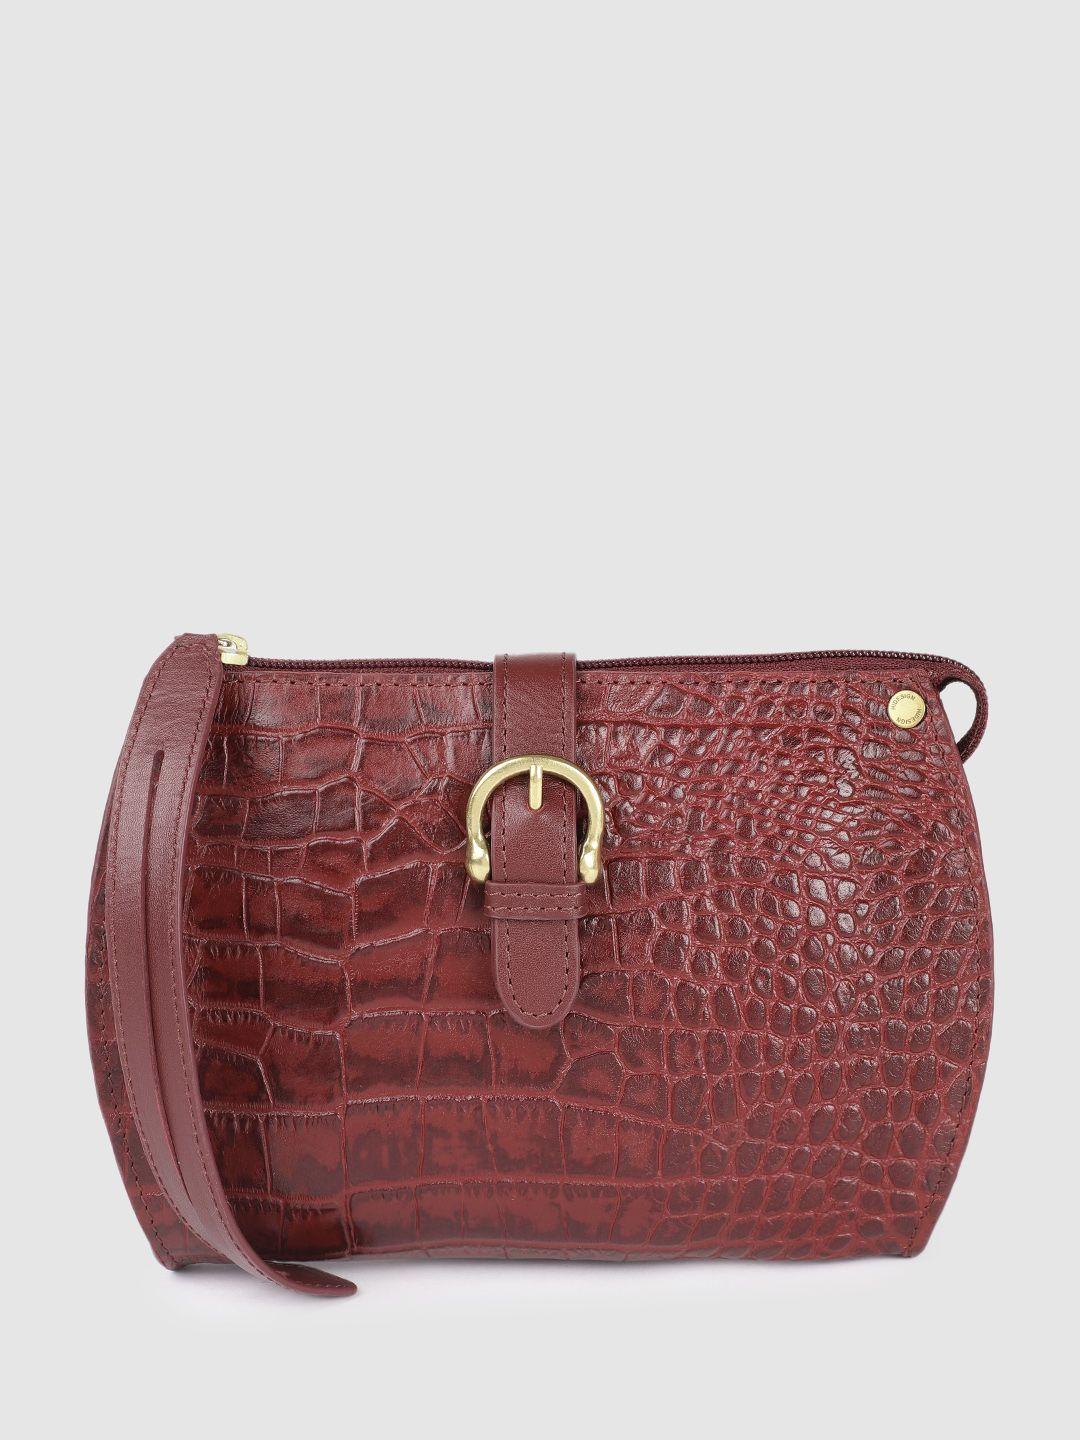 hidesign textured leather purse clutch